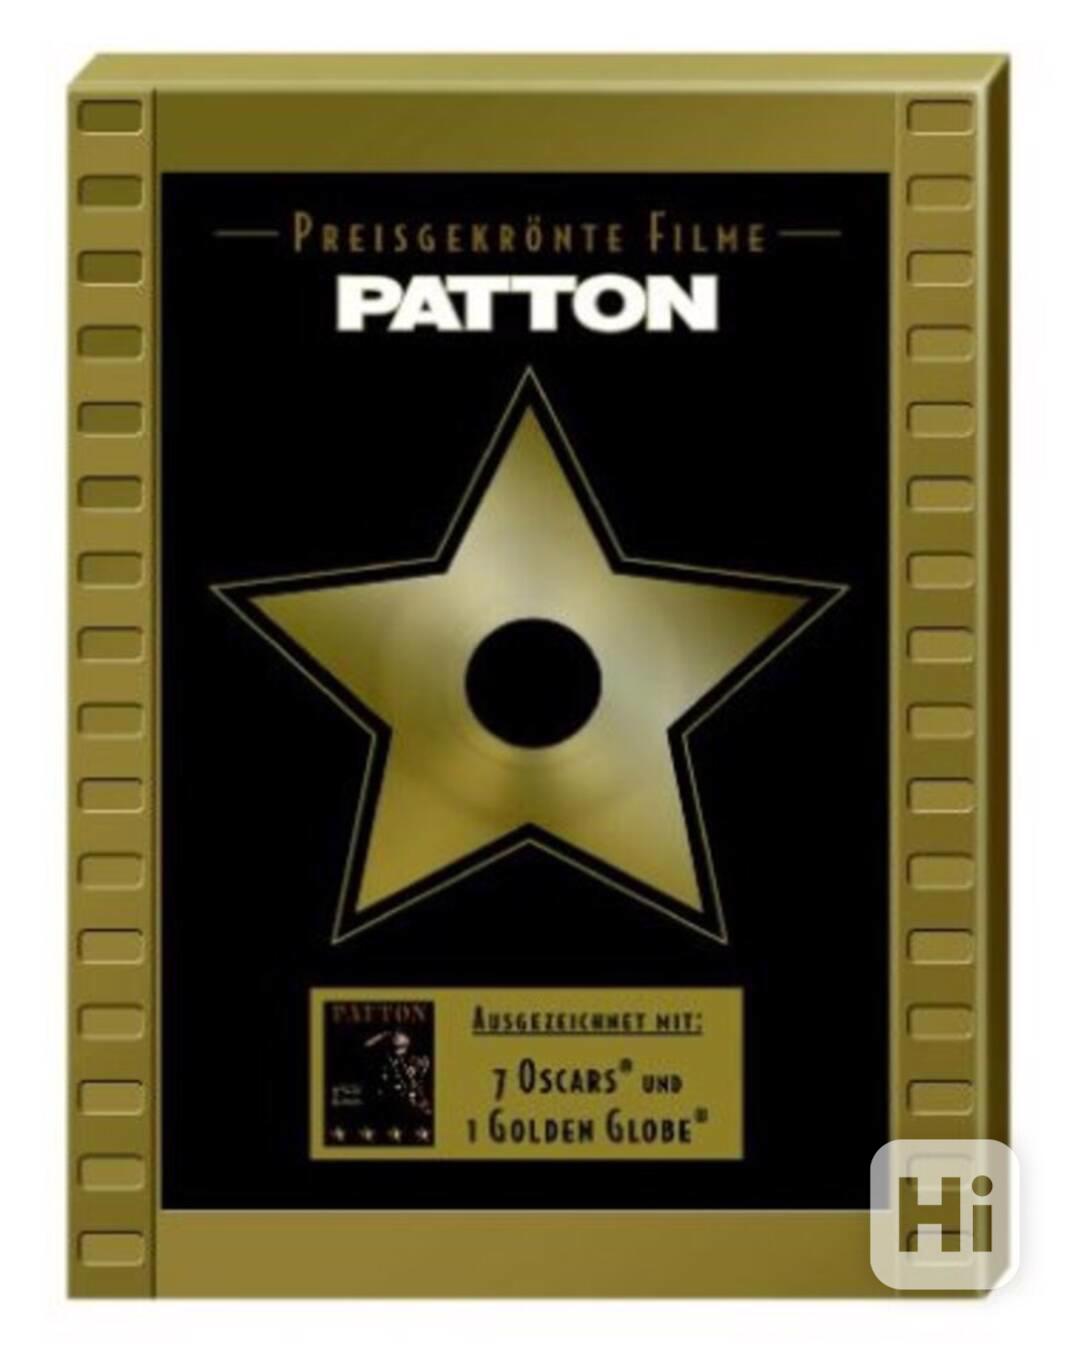 DVD Patton - Preisgekrönte Film Limit. Edice Němčina/English - foto 1